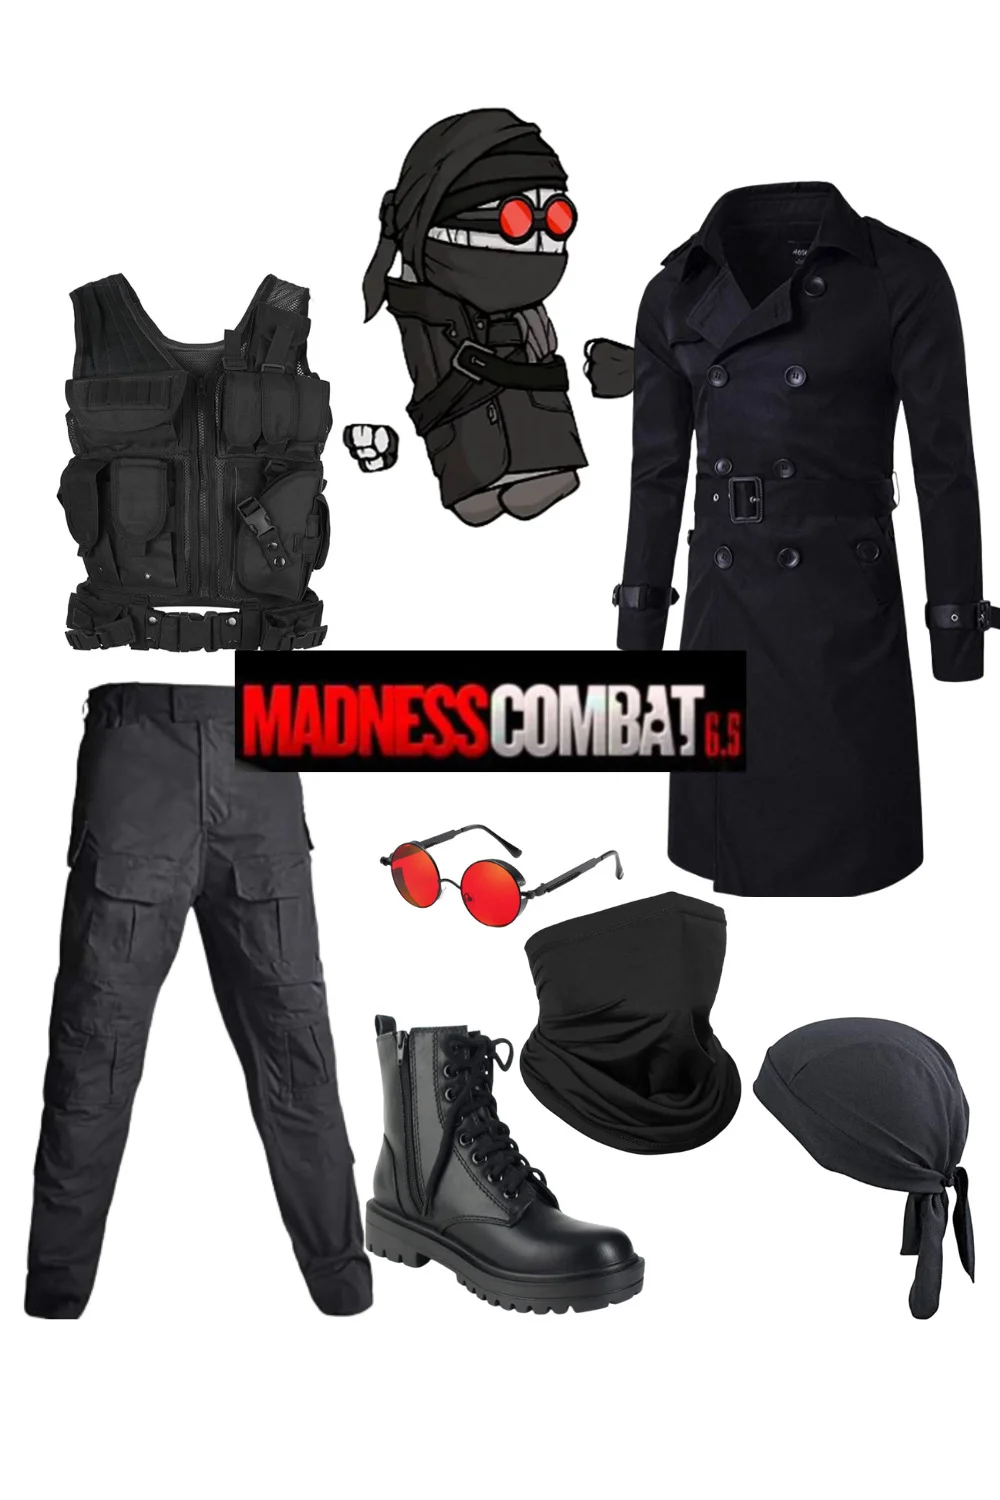 madness combat Costumes